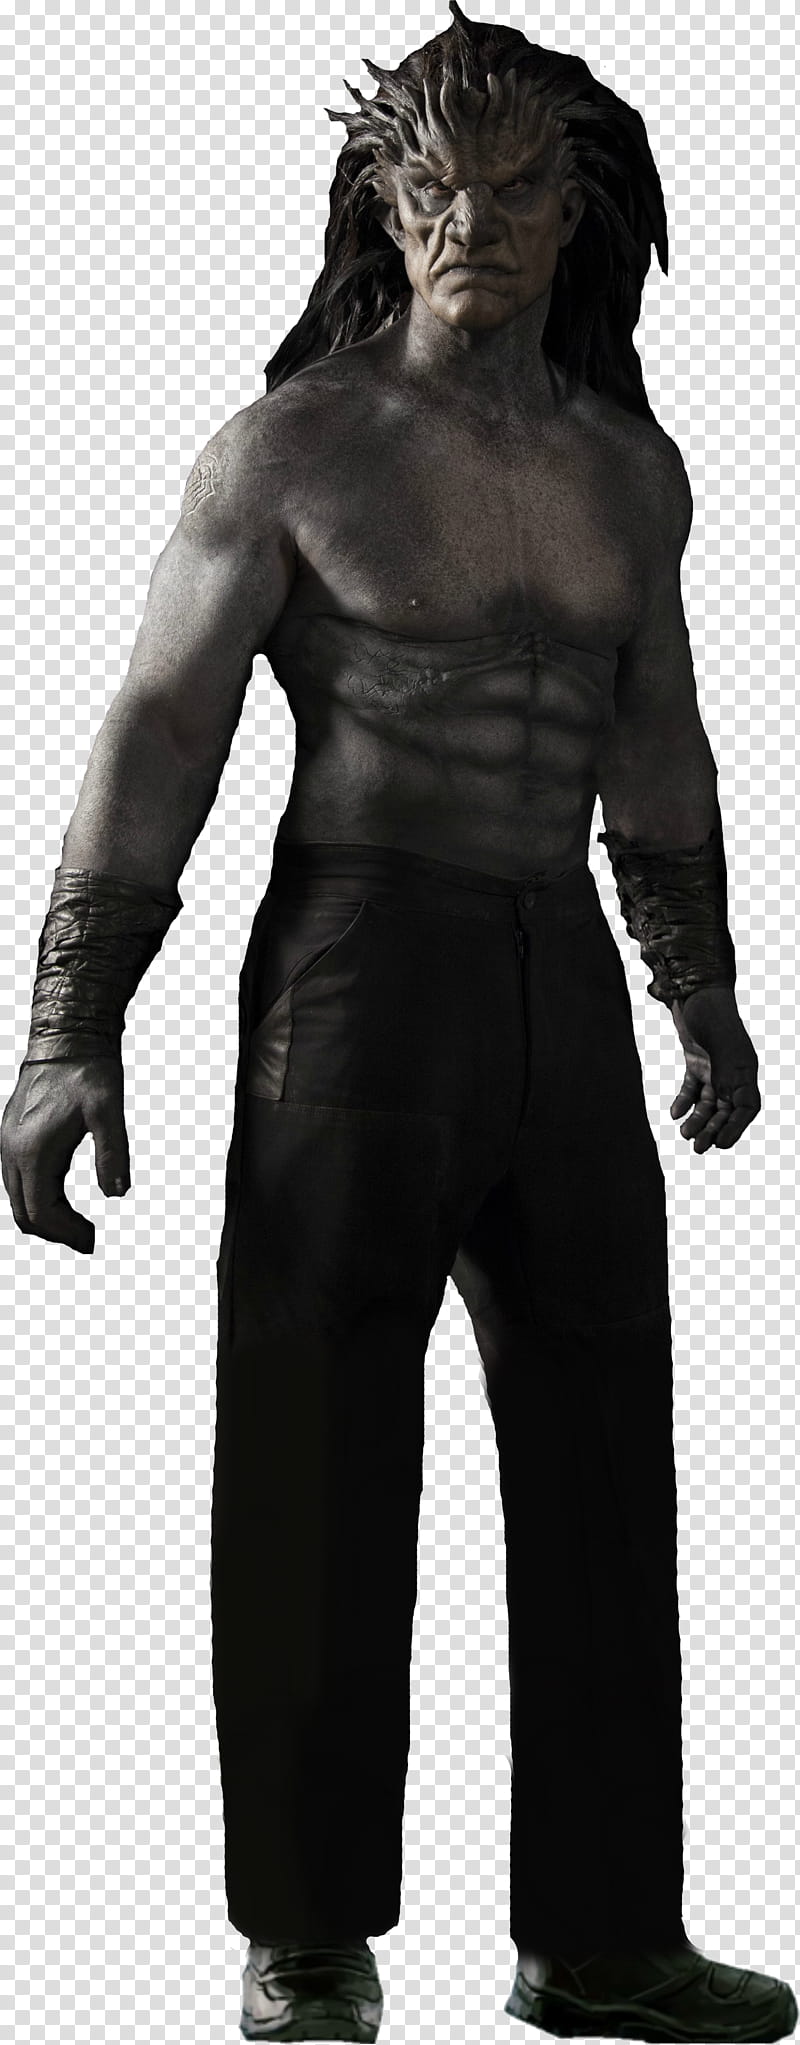 Marvel Agents of Shield Lash, man in black bottoms transparent background PNG clipart